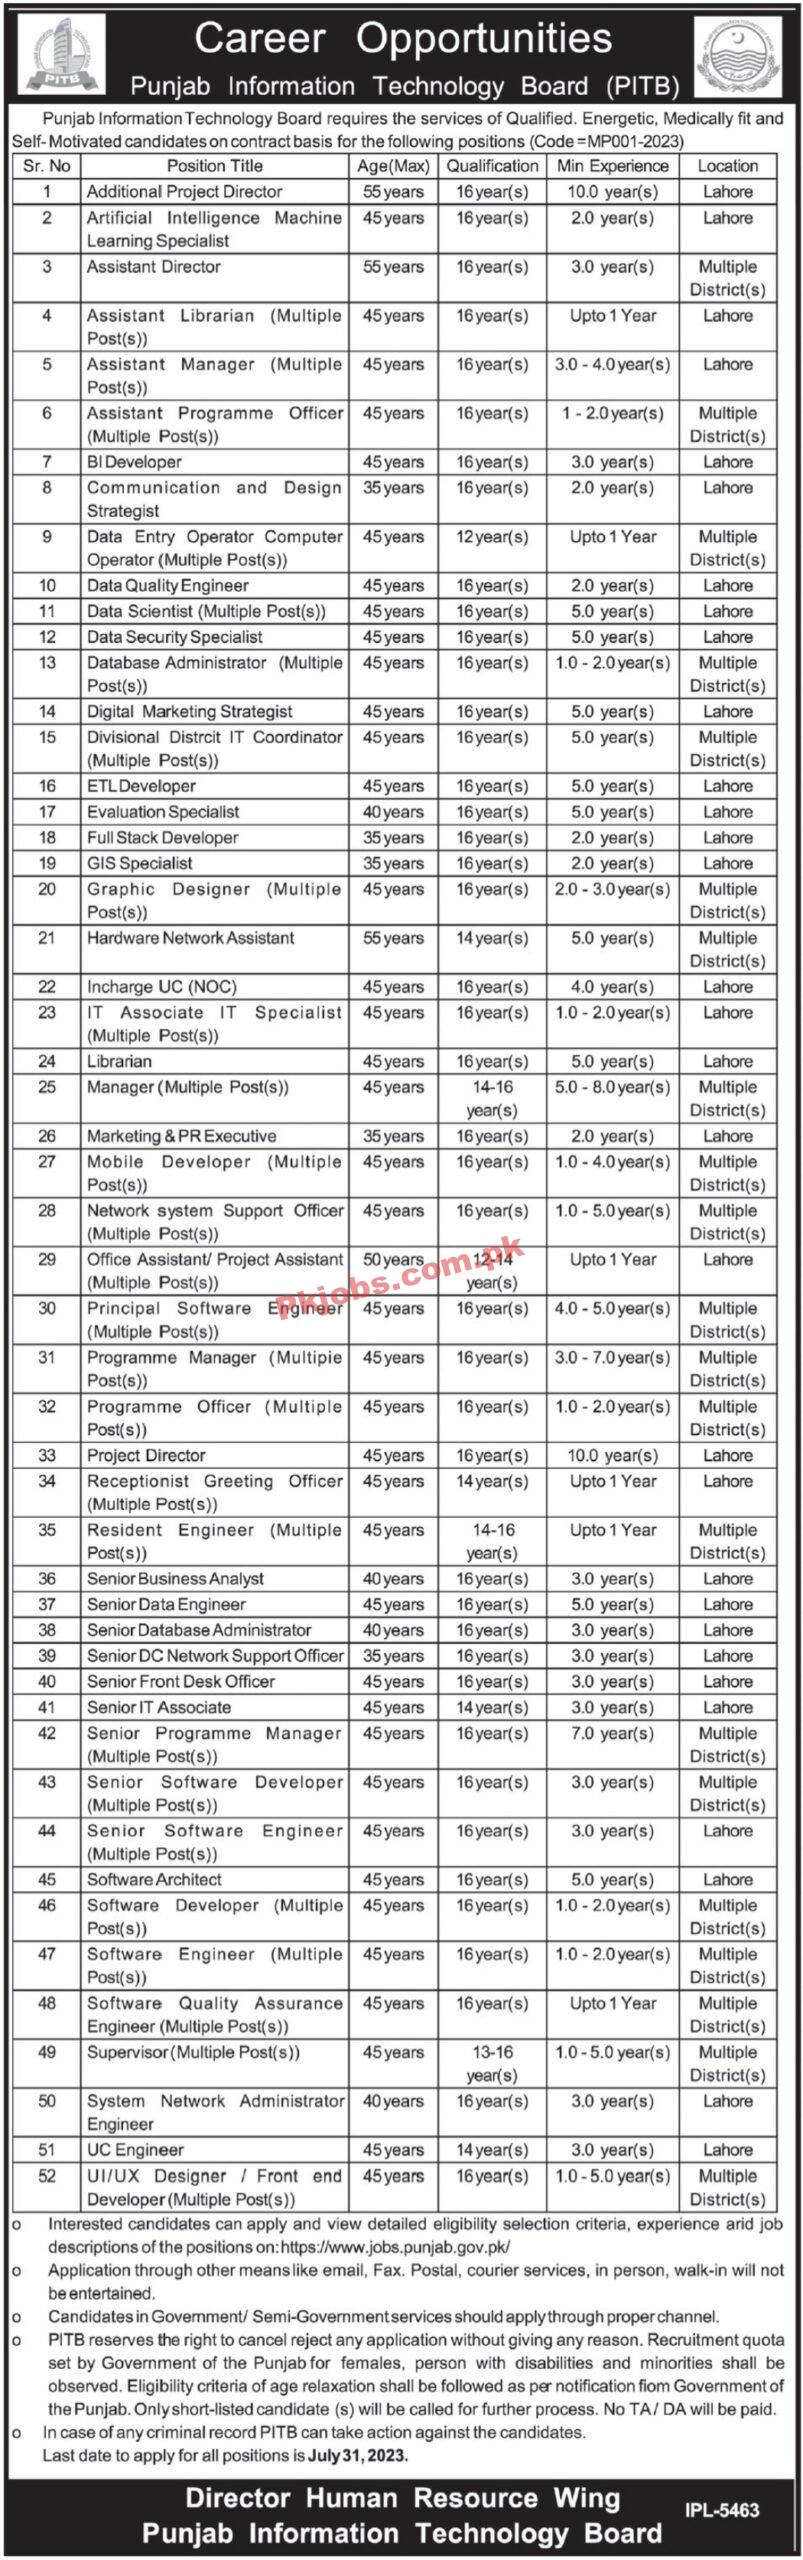 PITB Jobs | Latest Punjab Information Technology Board Jobs 2023 | Punjab Information Technology Board Announced Latest Jobs 2023